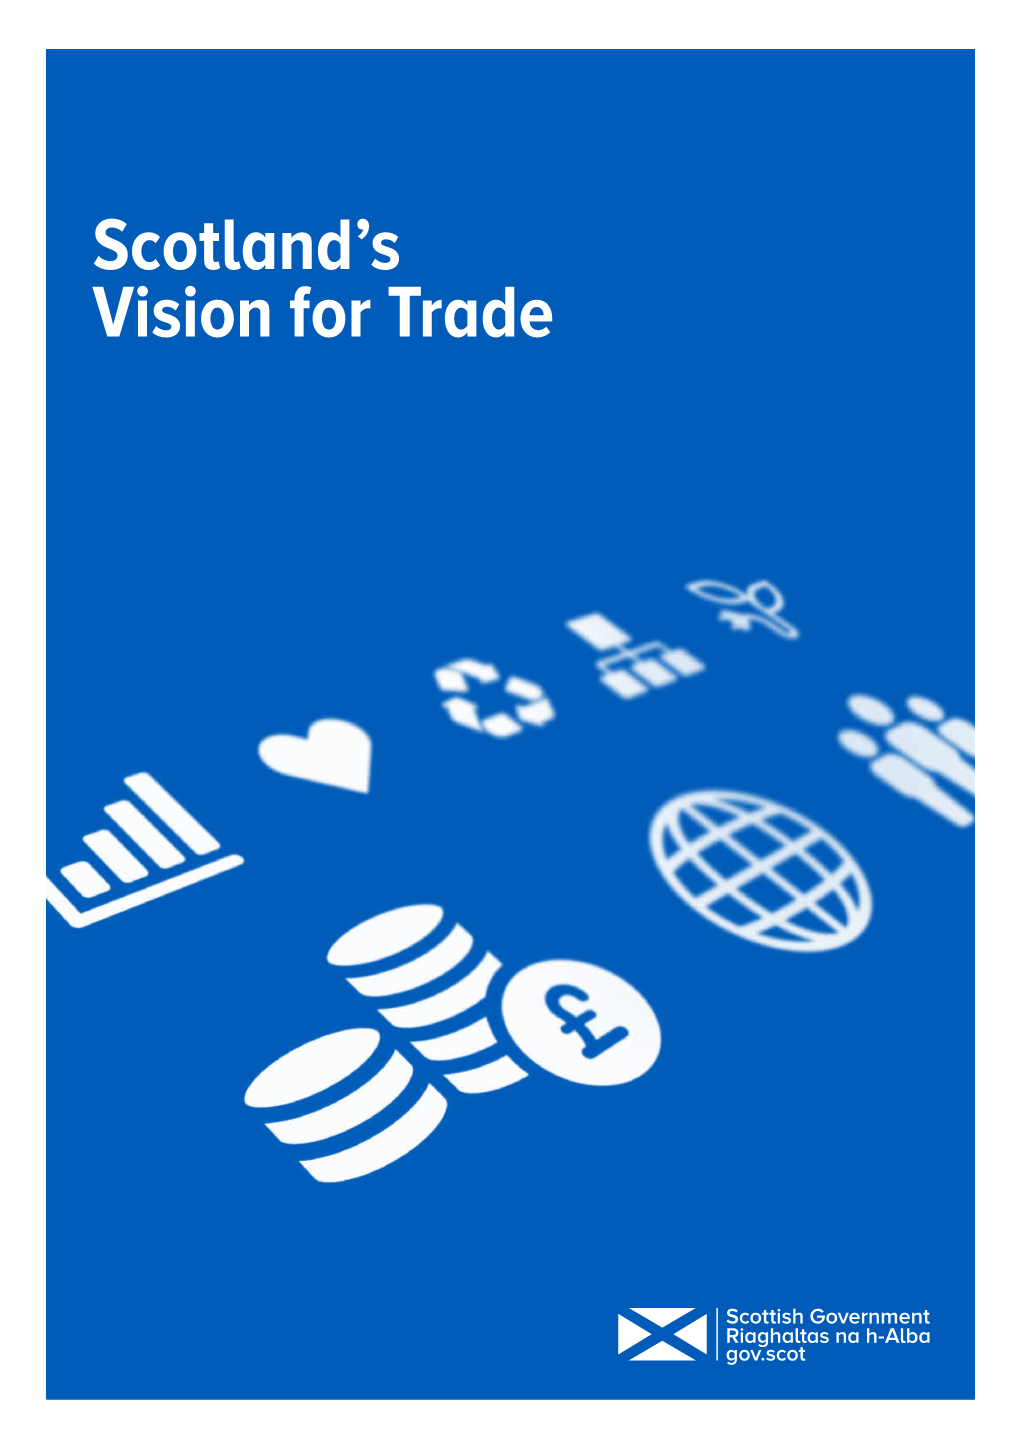 Scotland's Vision for Trade